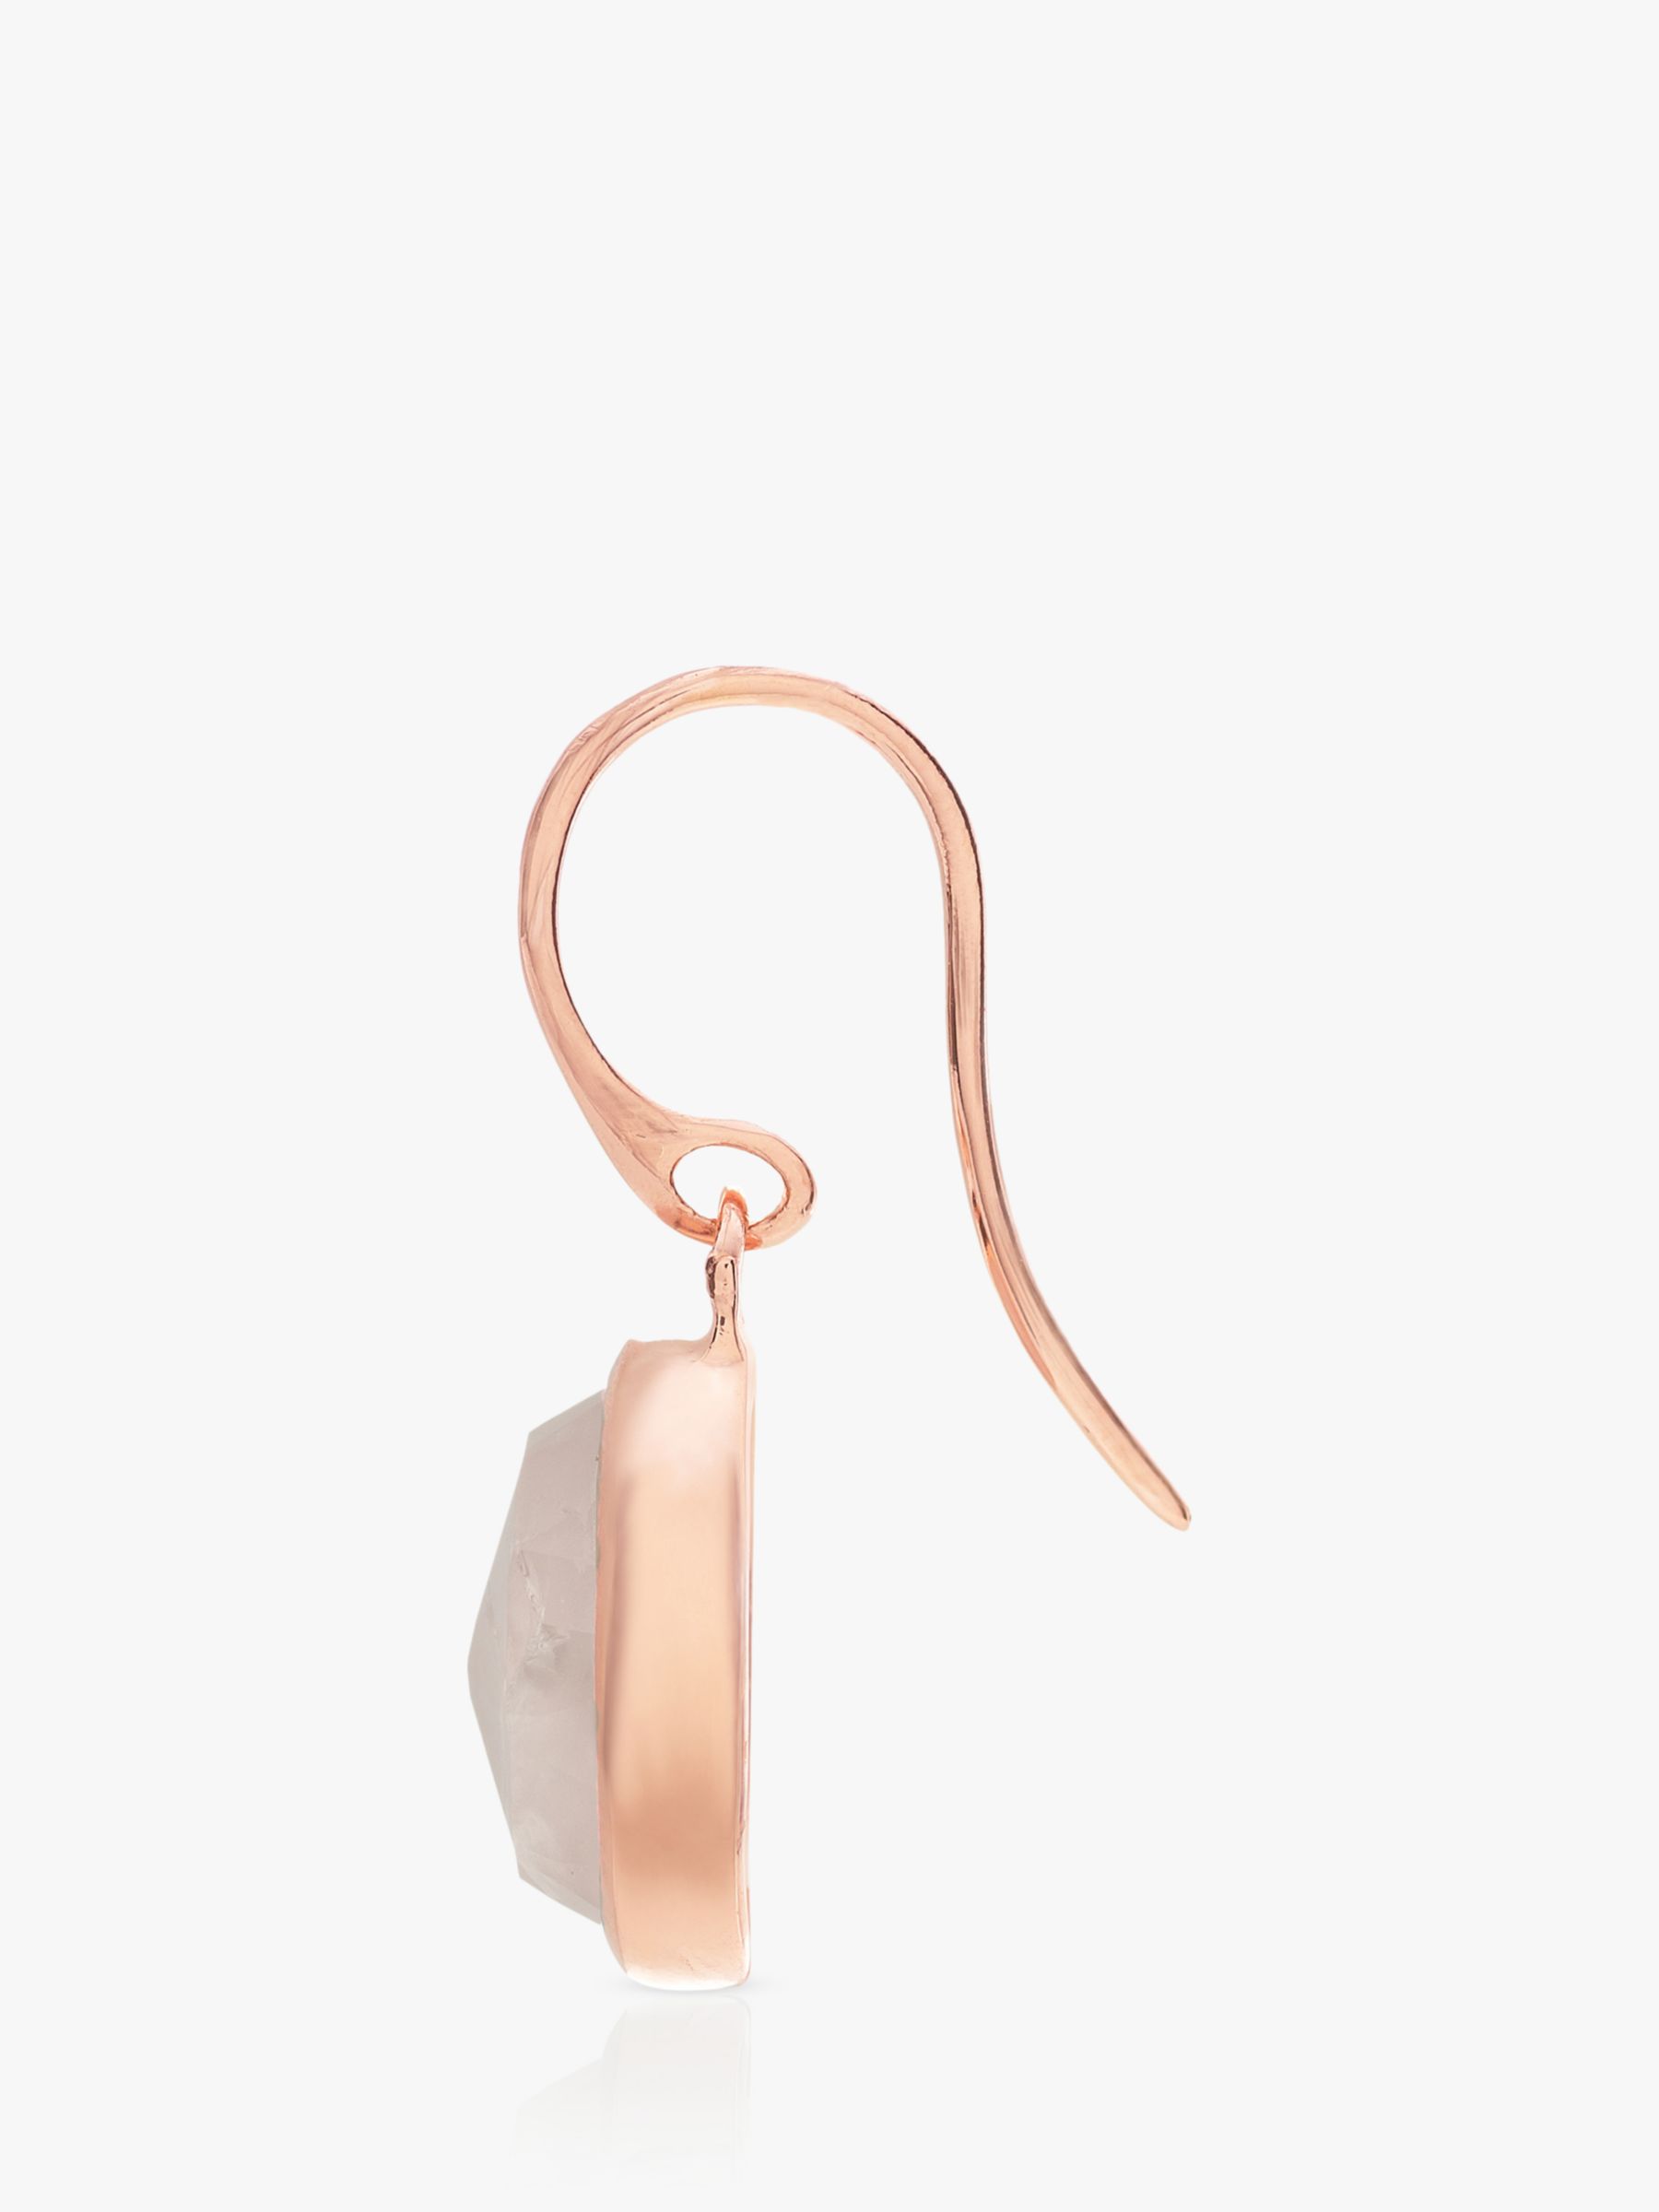 Monica Vinader Siren Wire Drop Earrings, Rose Gold/Pink Quartz